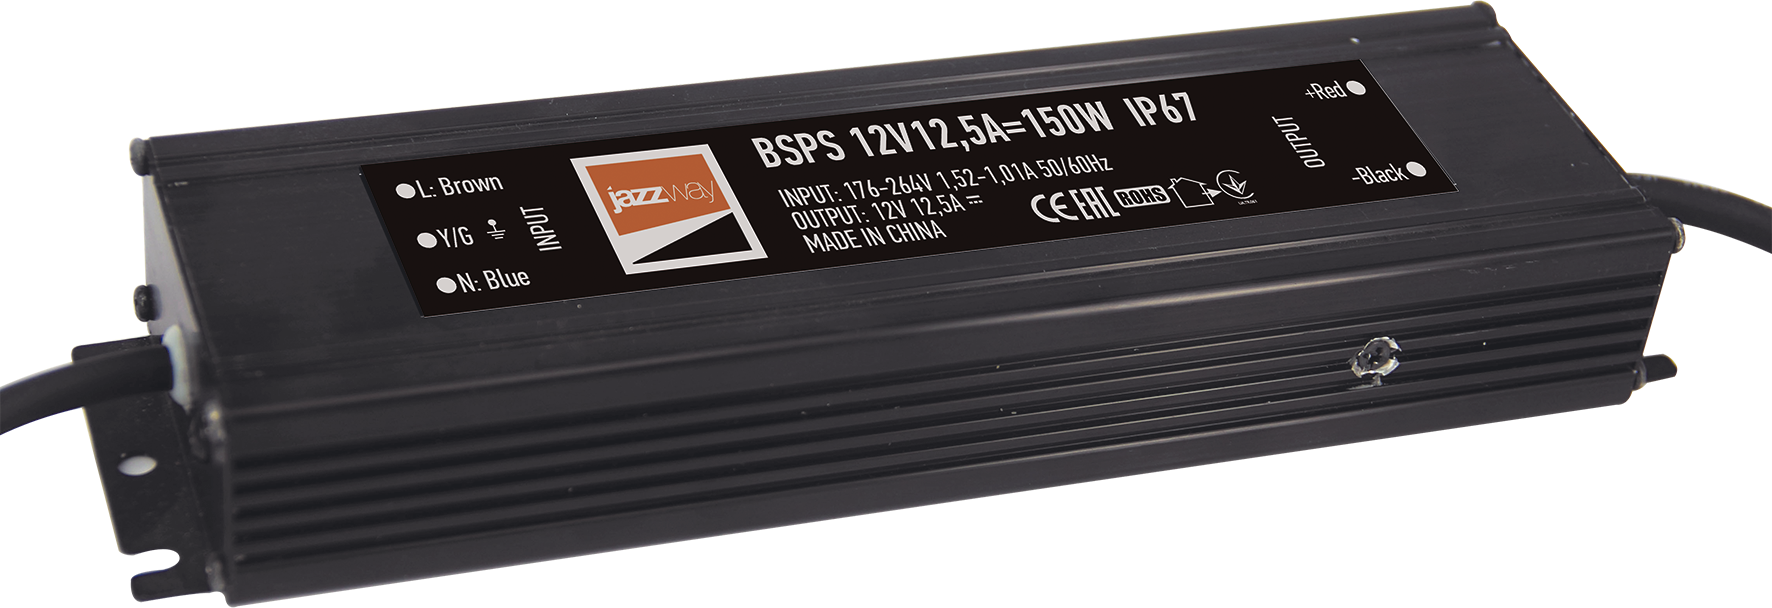 LED-драйвер / контроллер jazzway BSPS 12V12,5A=150w 3329297A